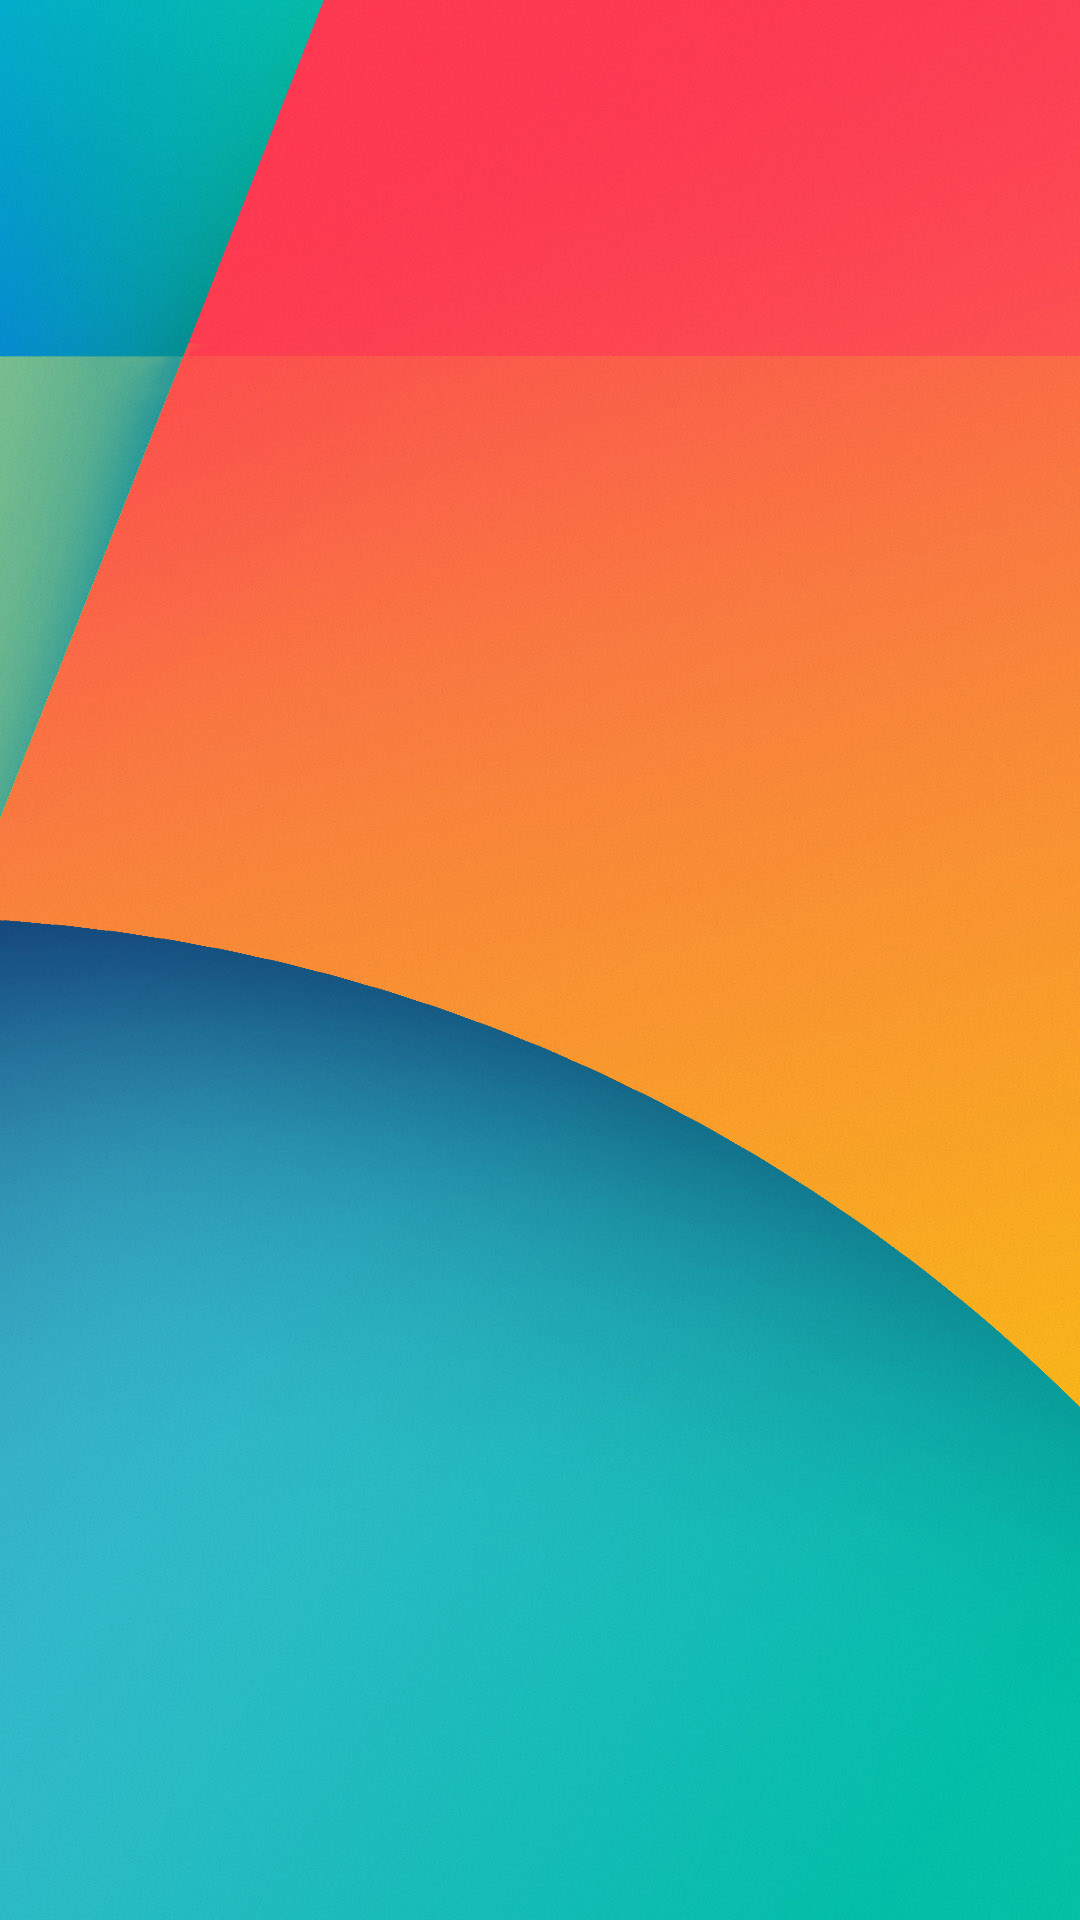 Nexus 5 Android 4.4 KitKat Orange Blue Android Wallpaper free download